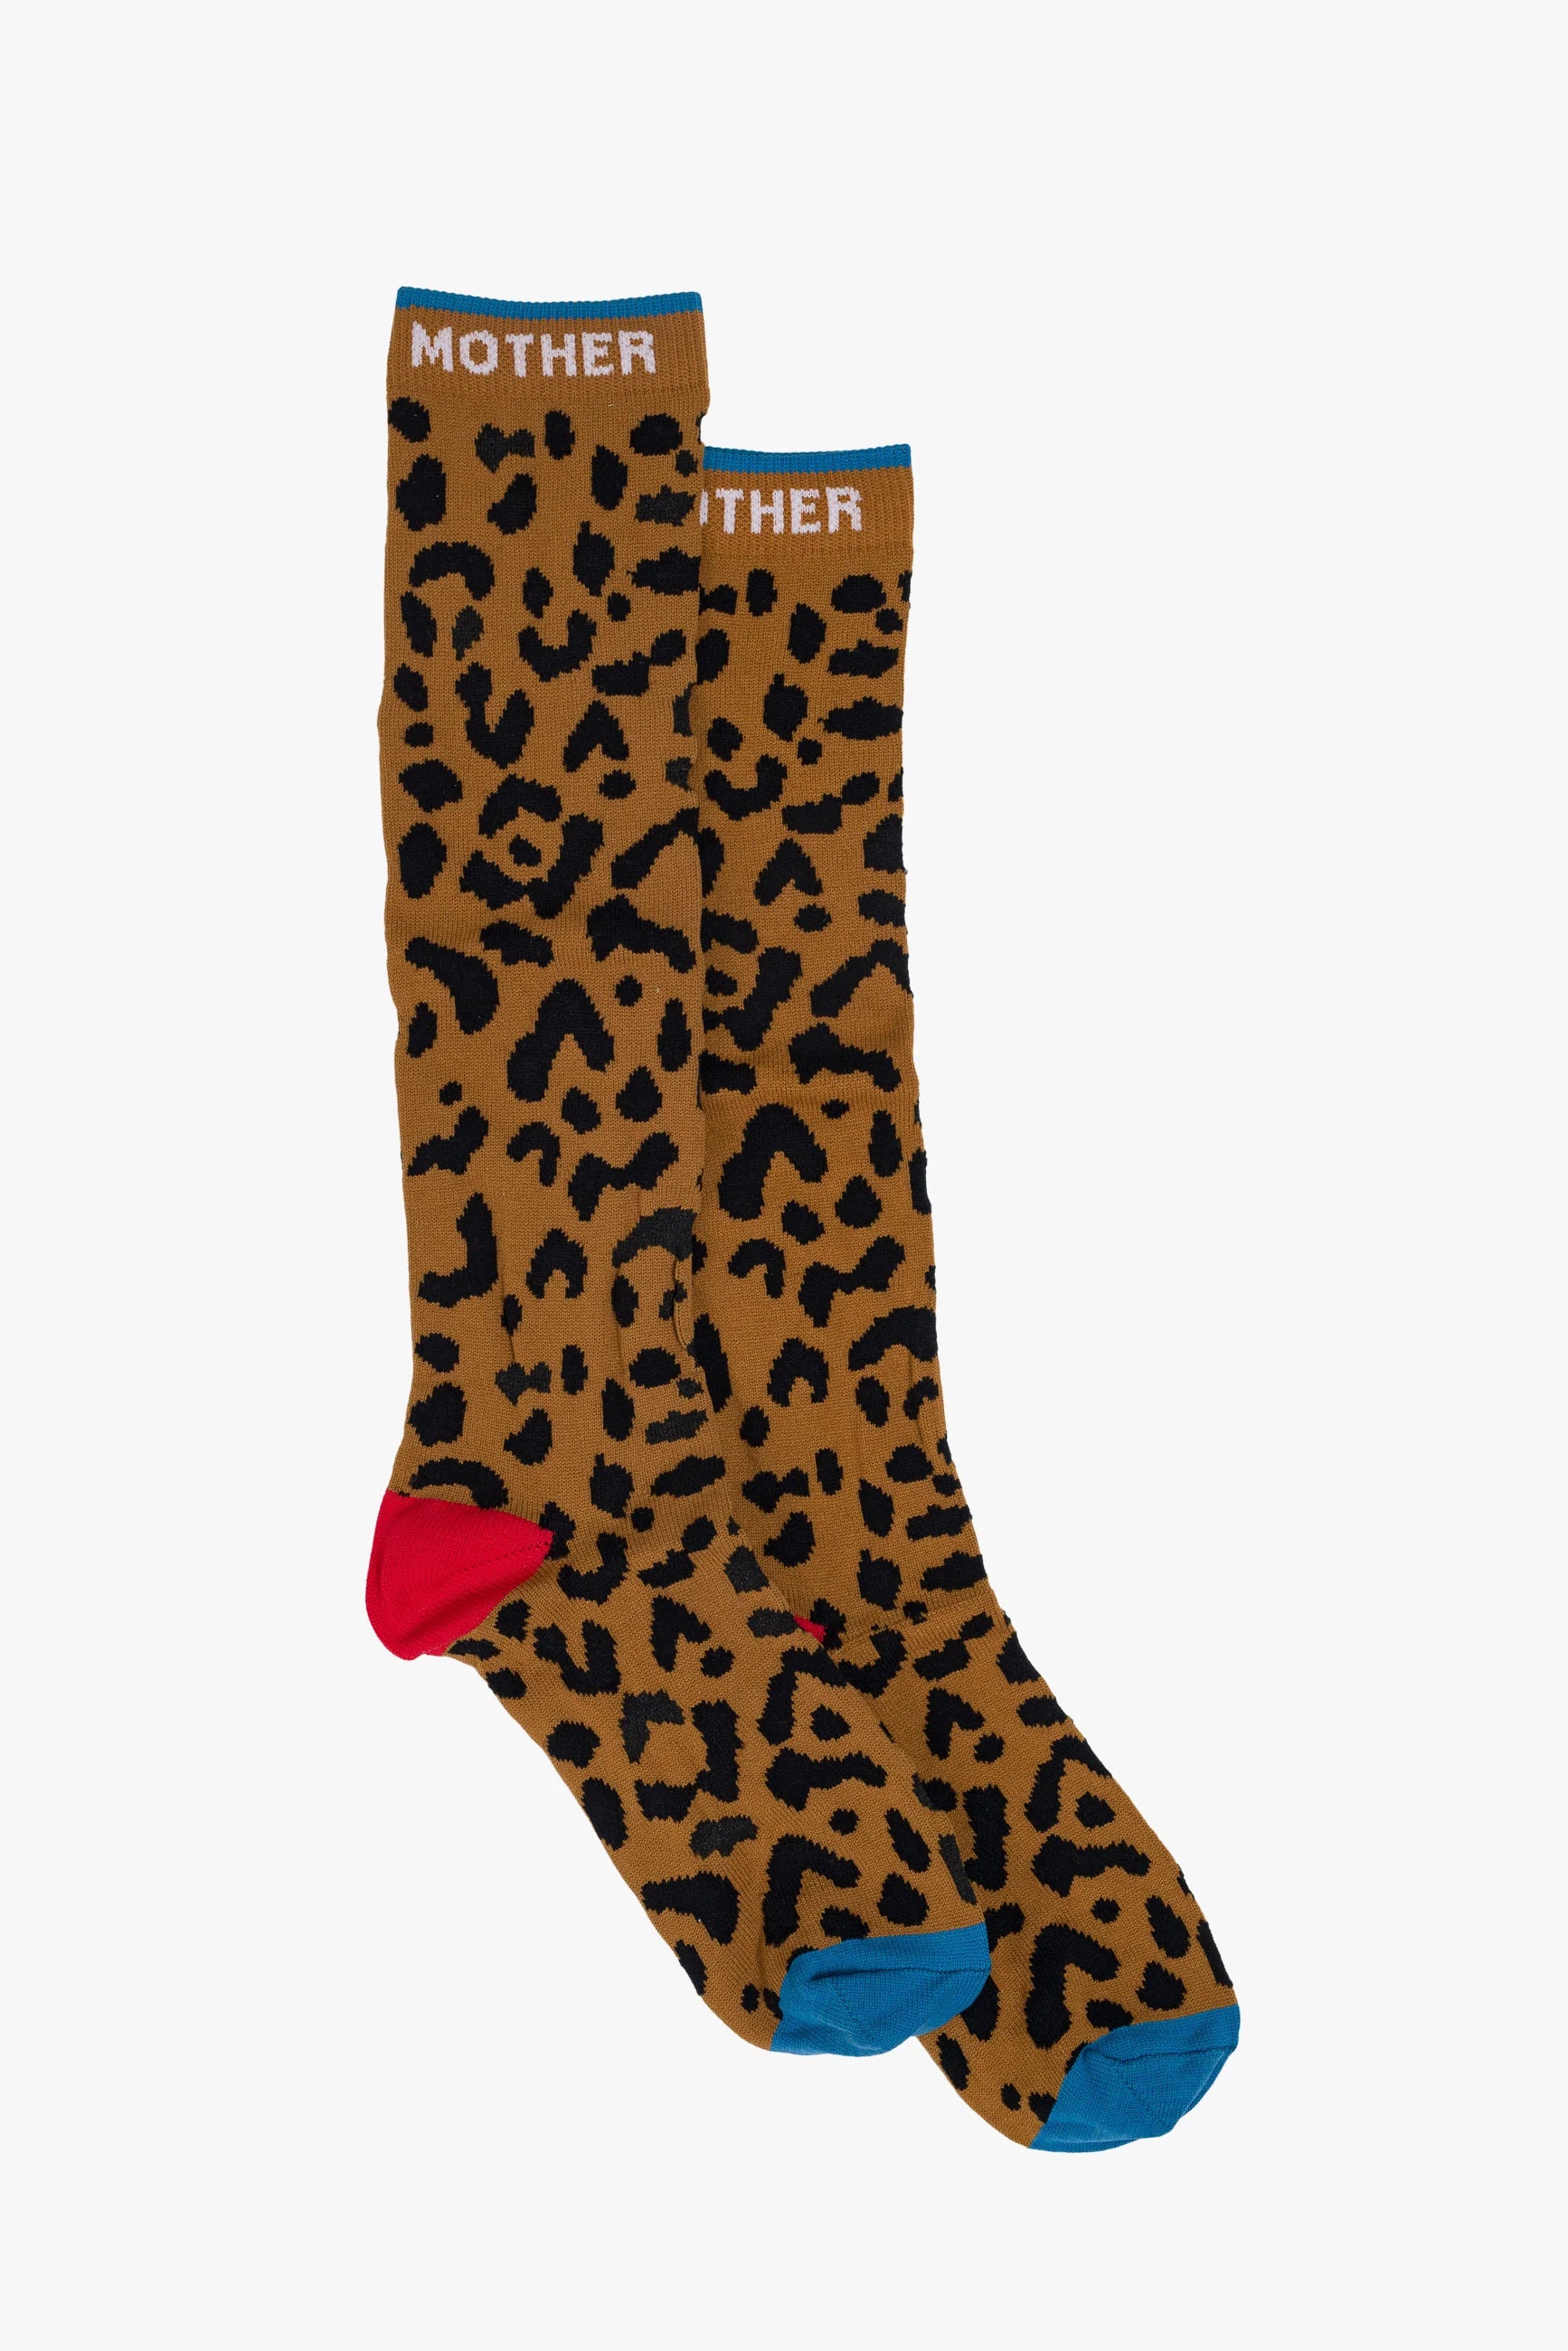 Leopard Mother Fucker Socks